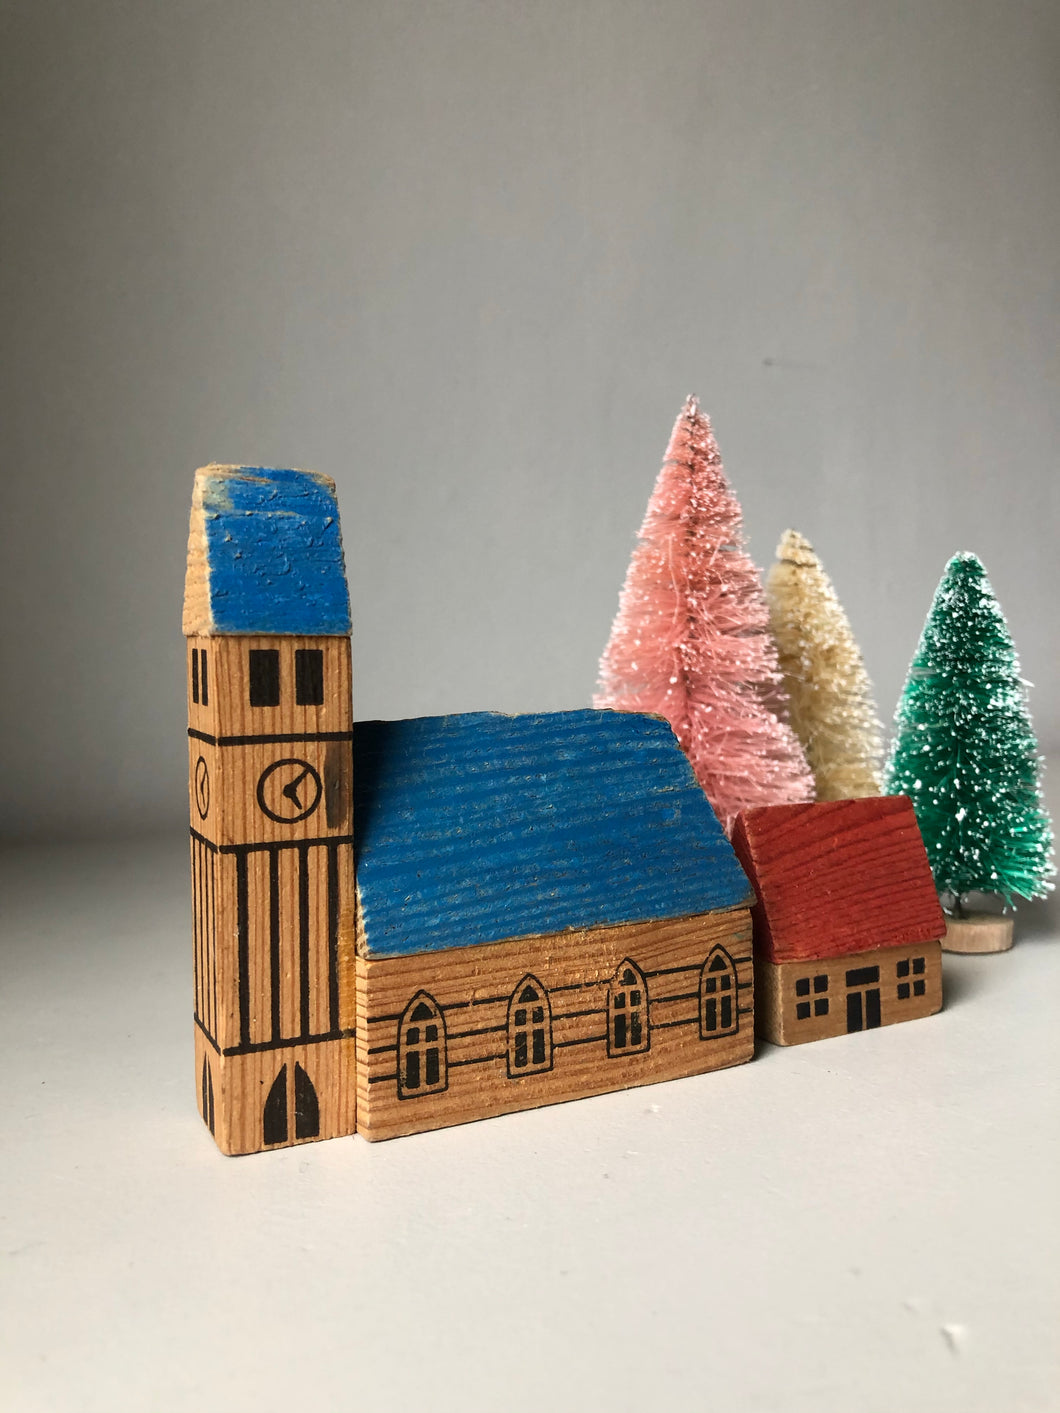 1950s German Wooden Christmas Village Set